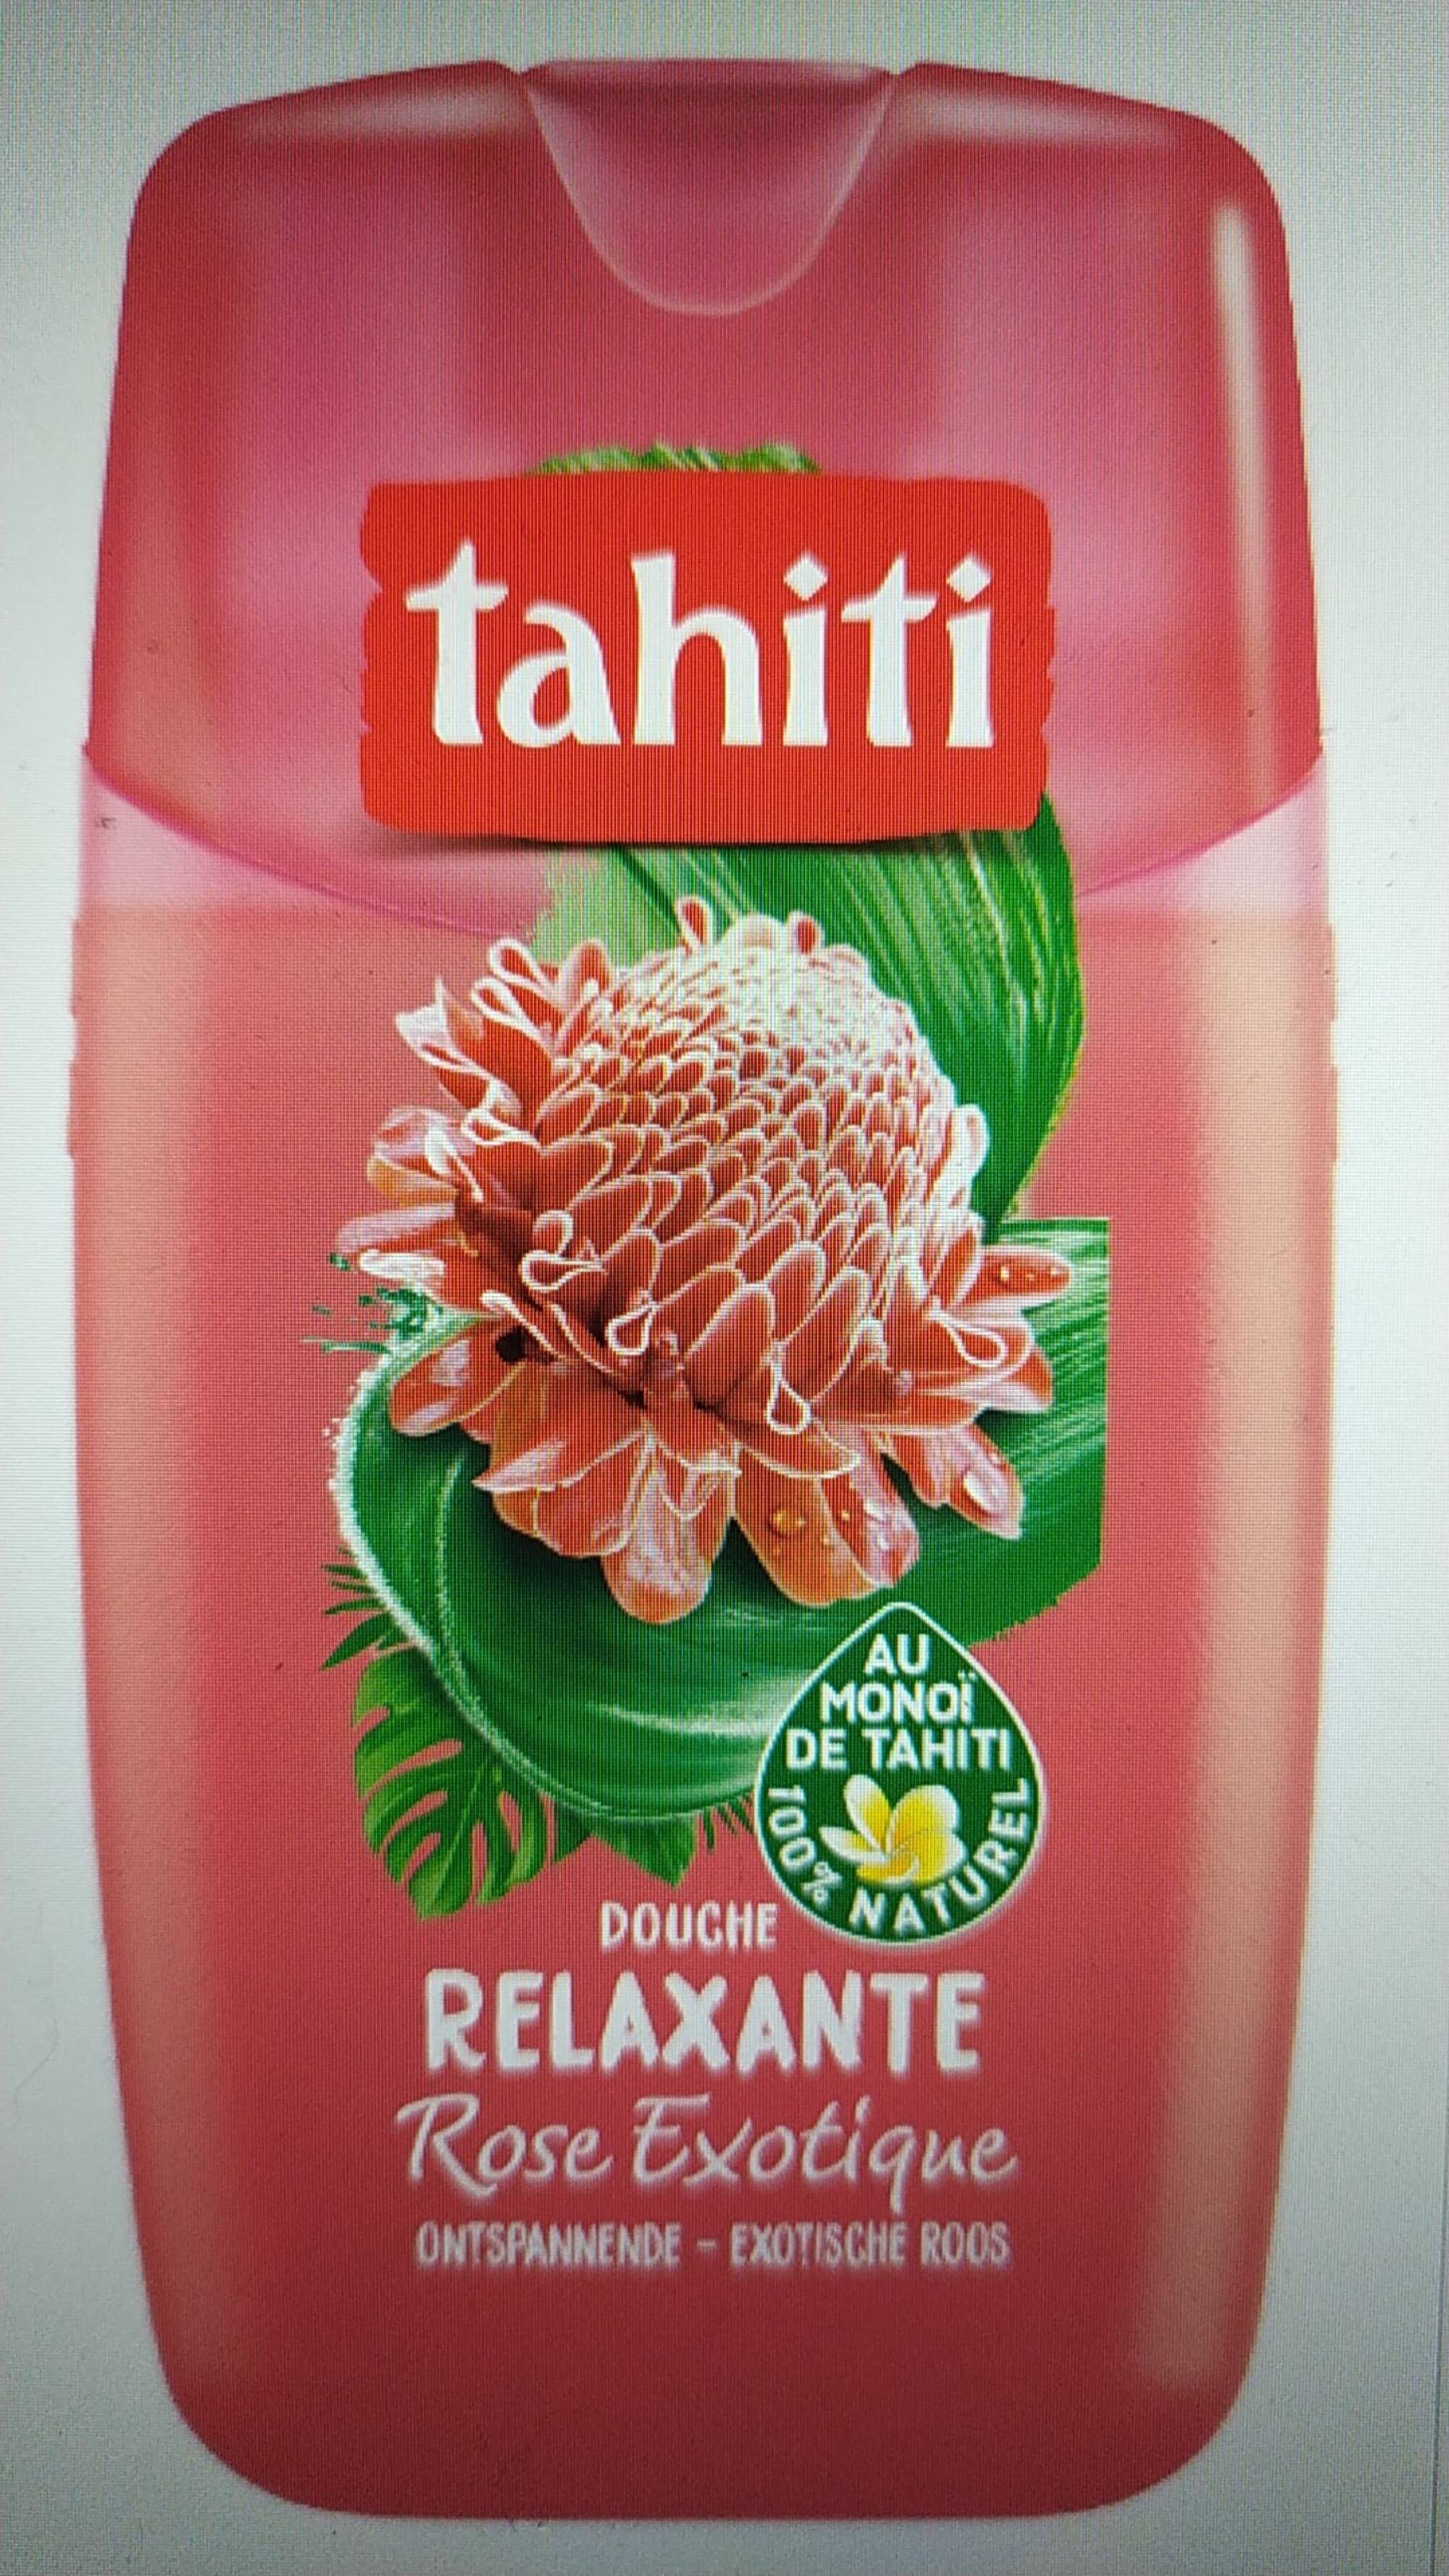 TAHITI - Rose exotique - Douche relaxante